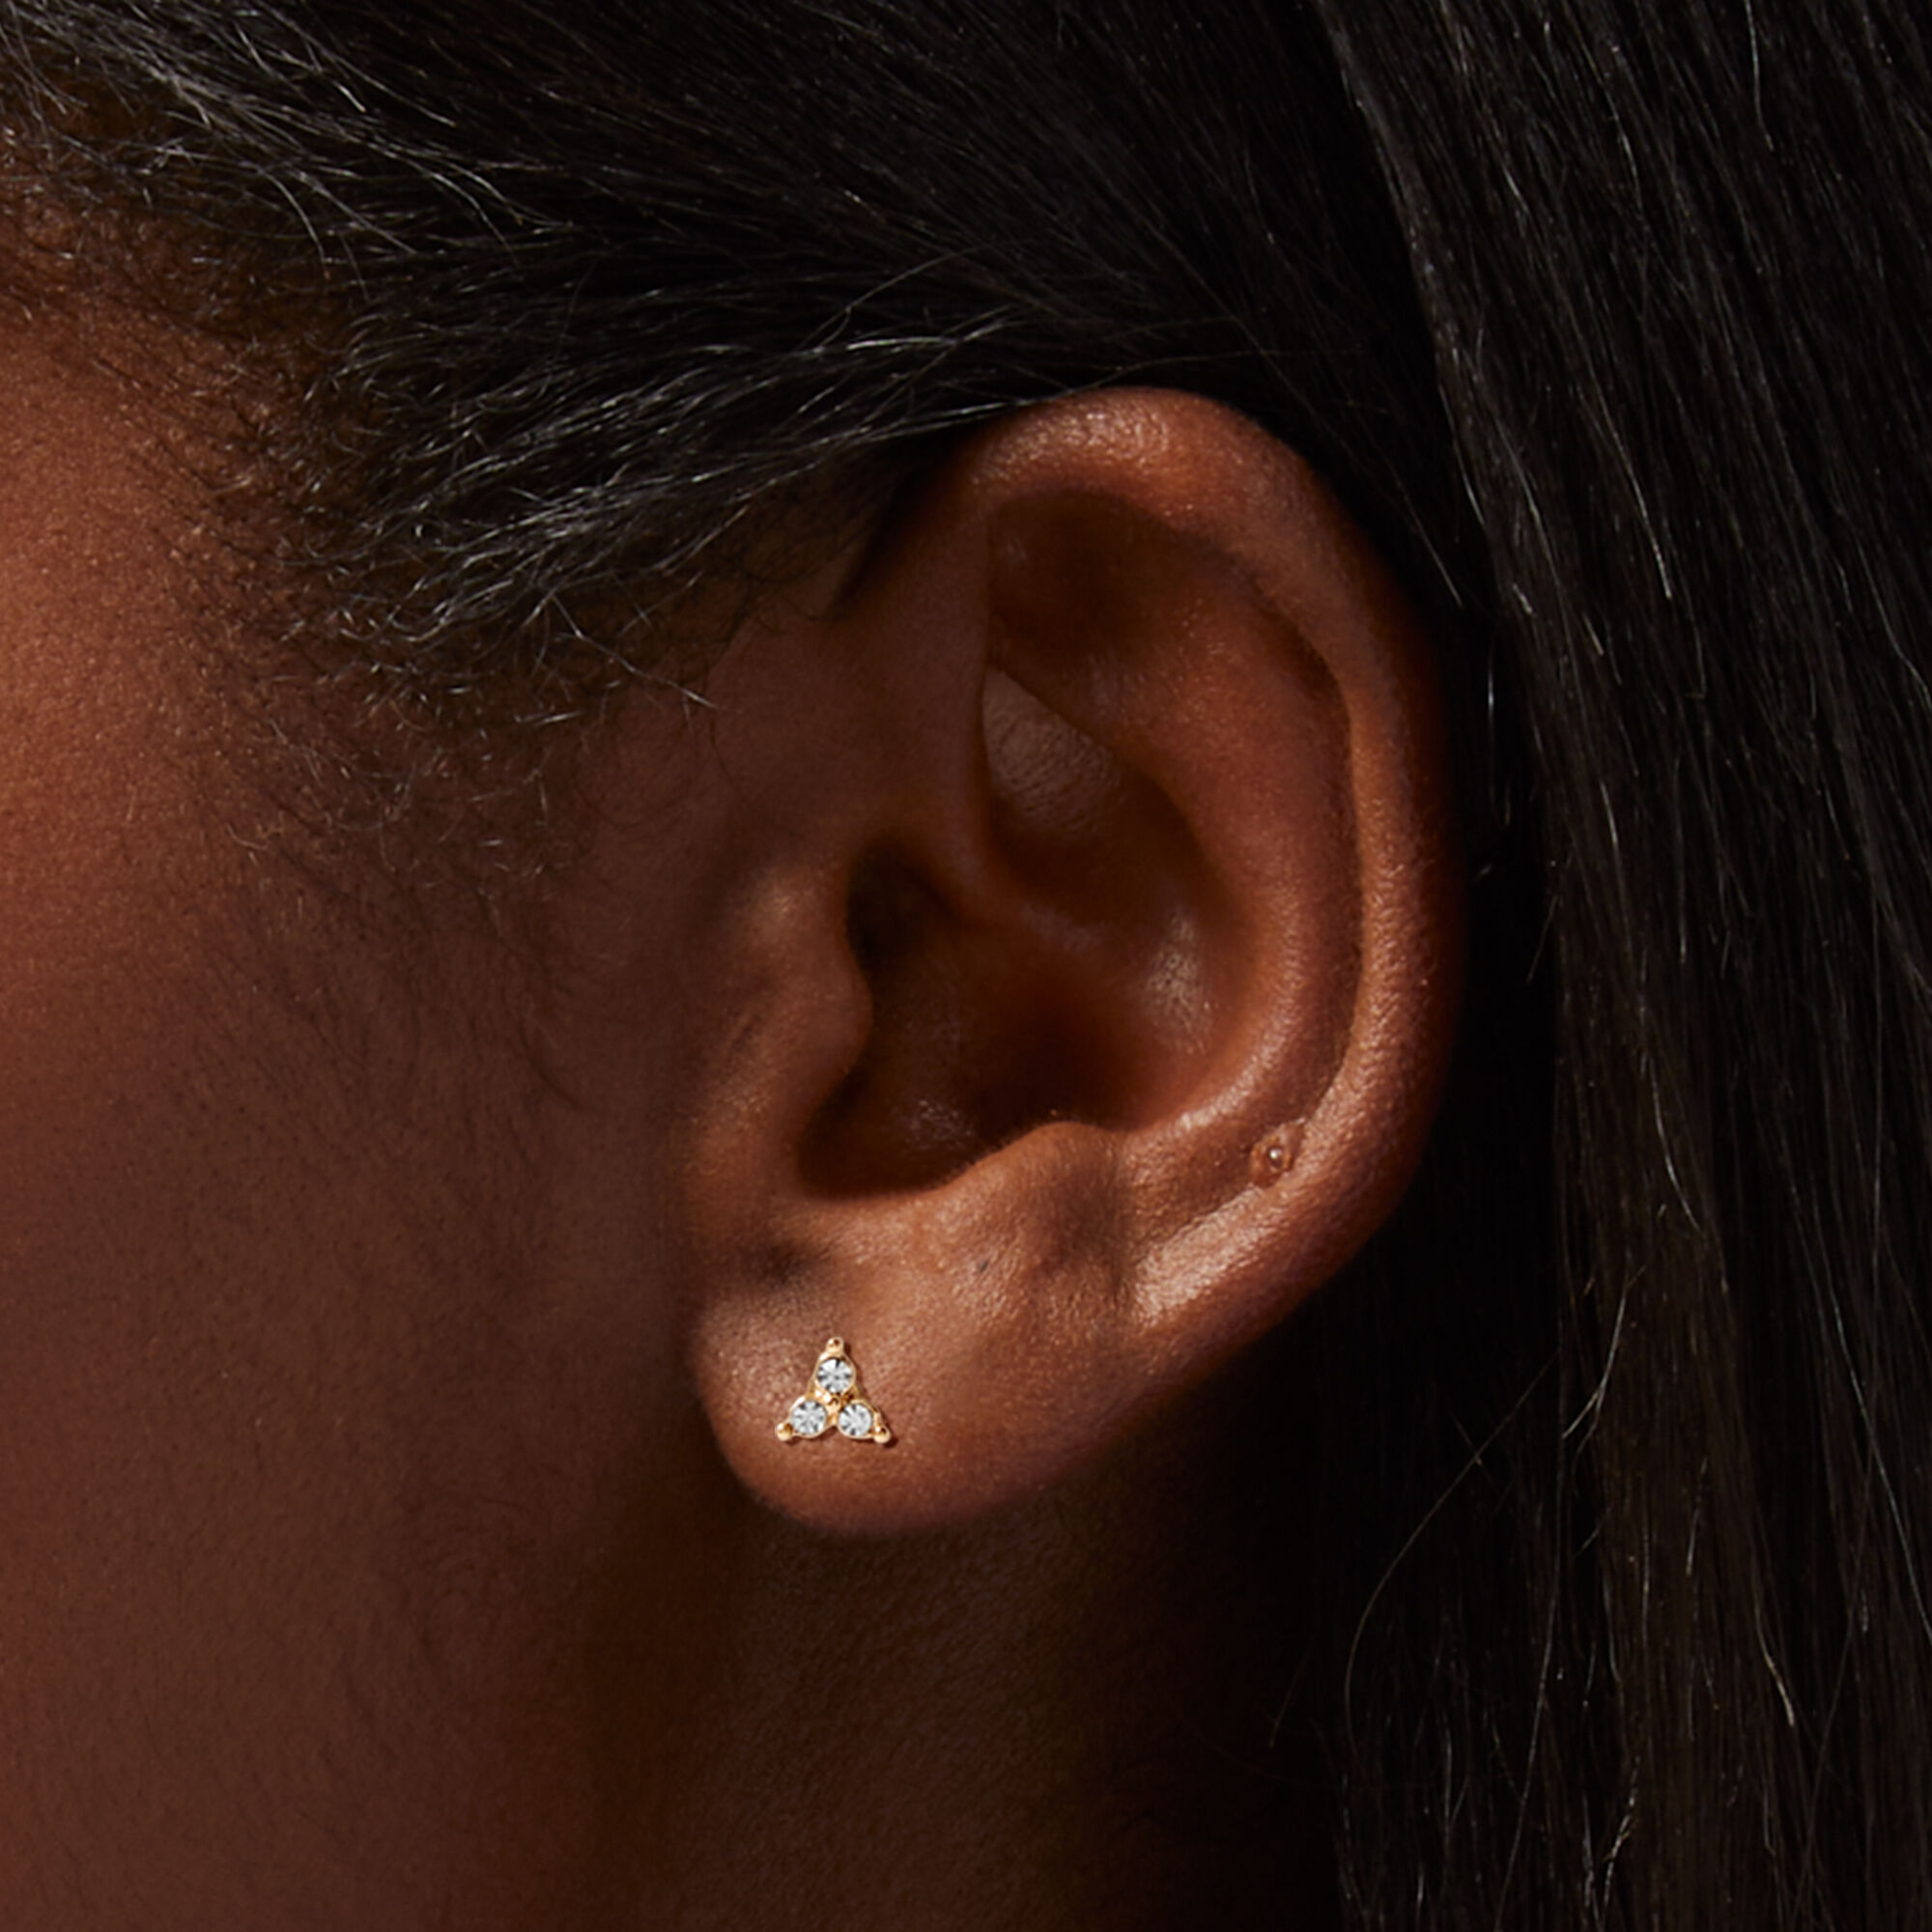 4mm Silver / Gold Ball Stud Earrings for Sensitive Ears